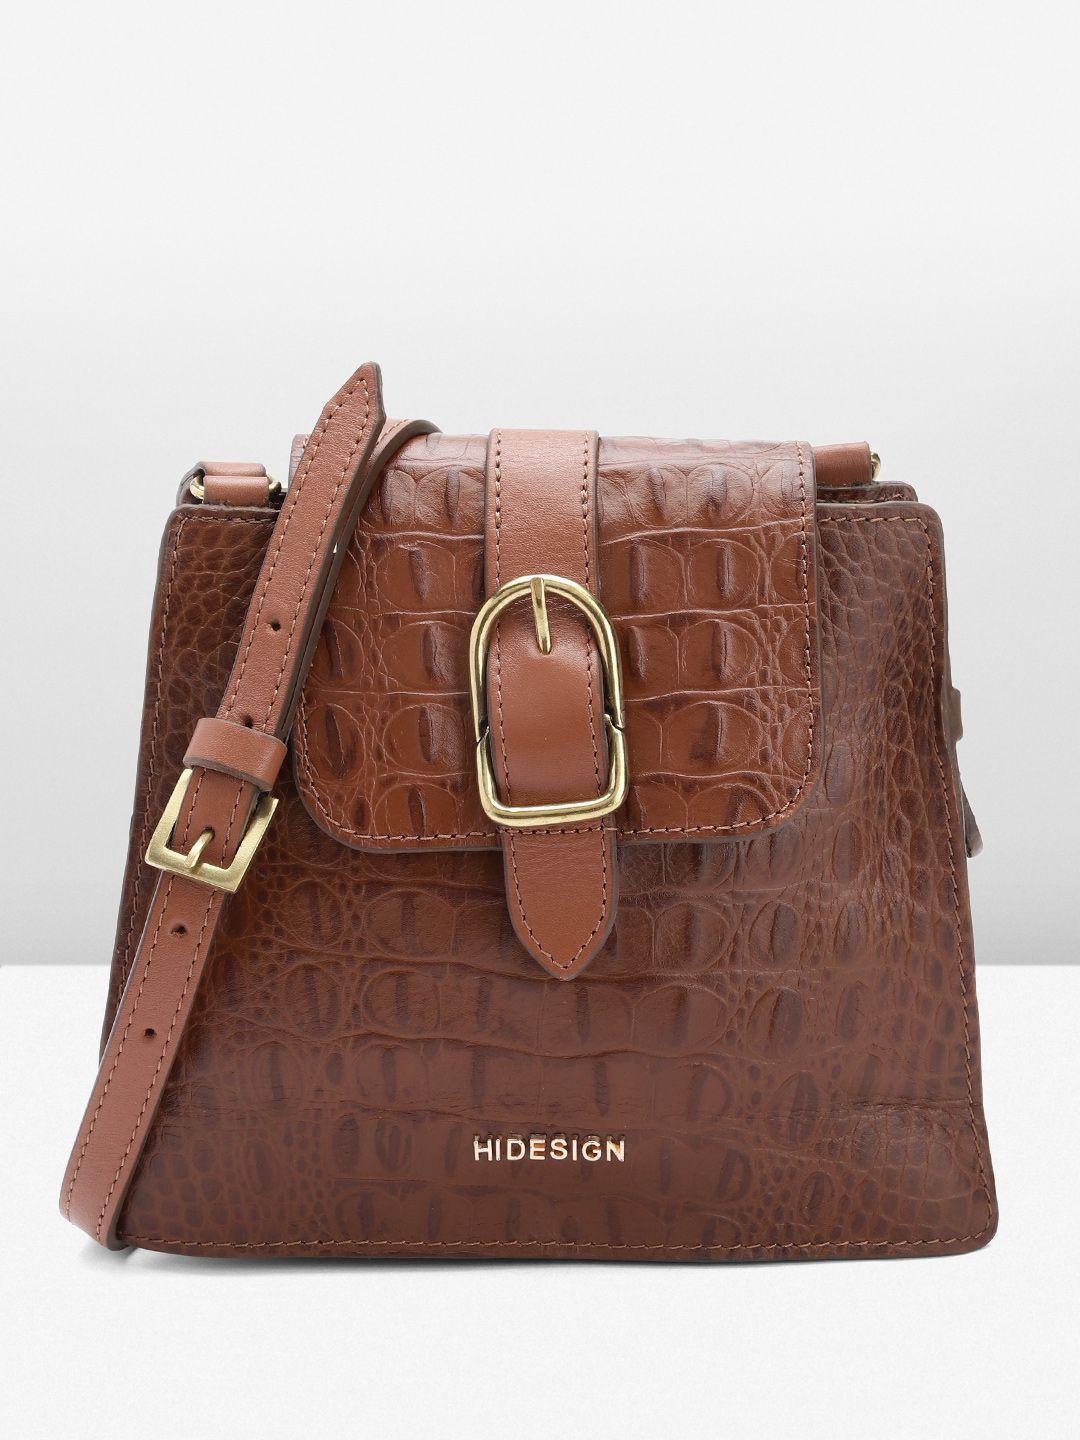 hidesign-croc-textured-leather-structured-sling-bag